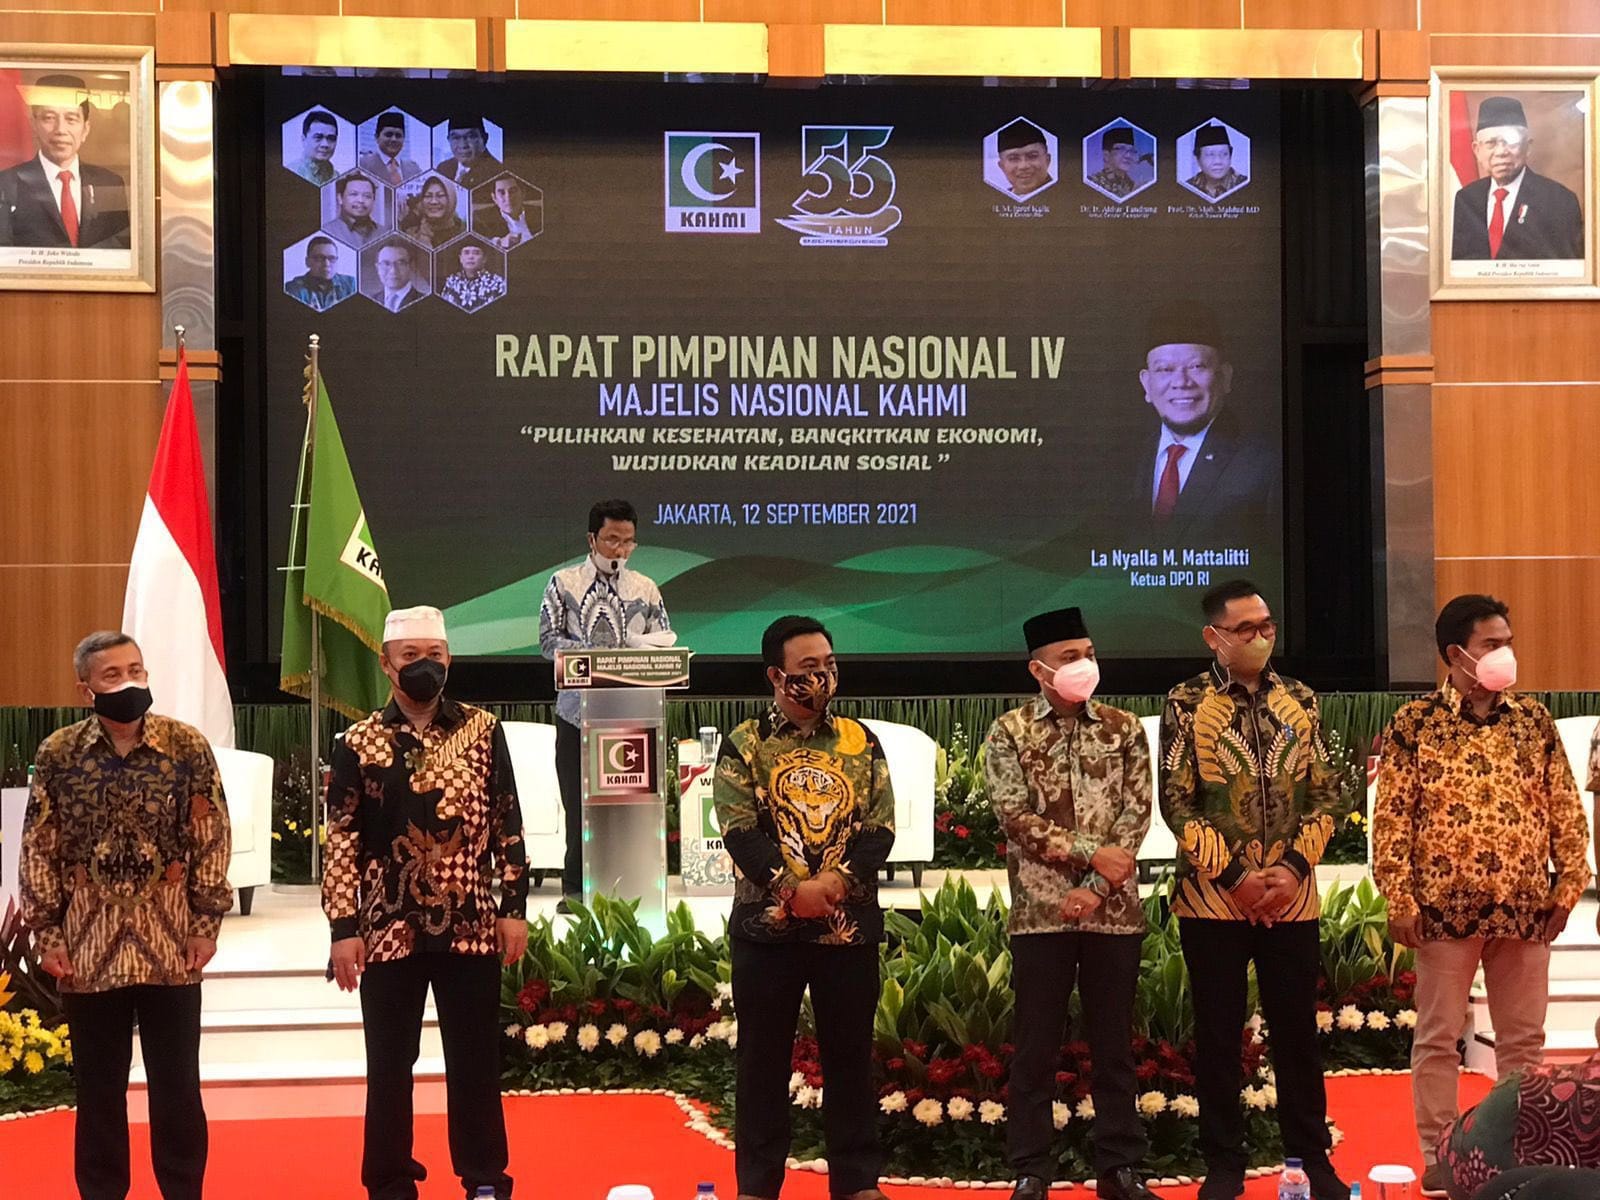 Senator asal Aceh Fachrul Razi (Nomor 3 dari kiri)